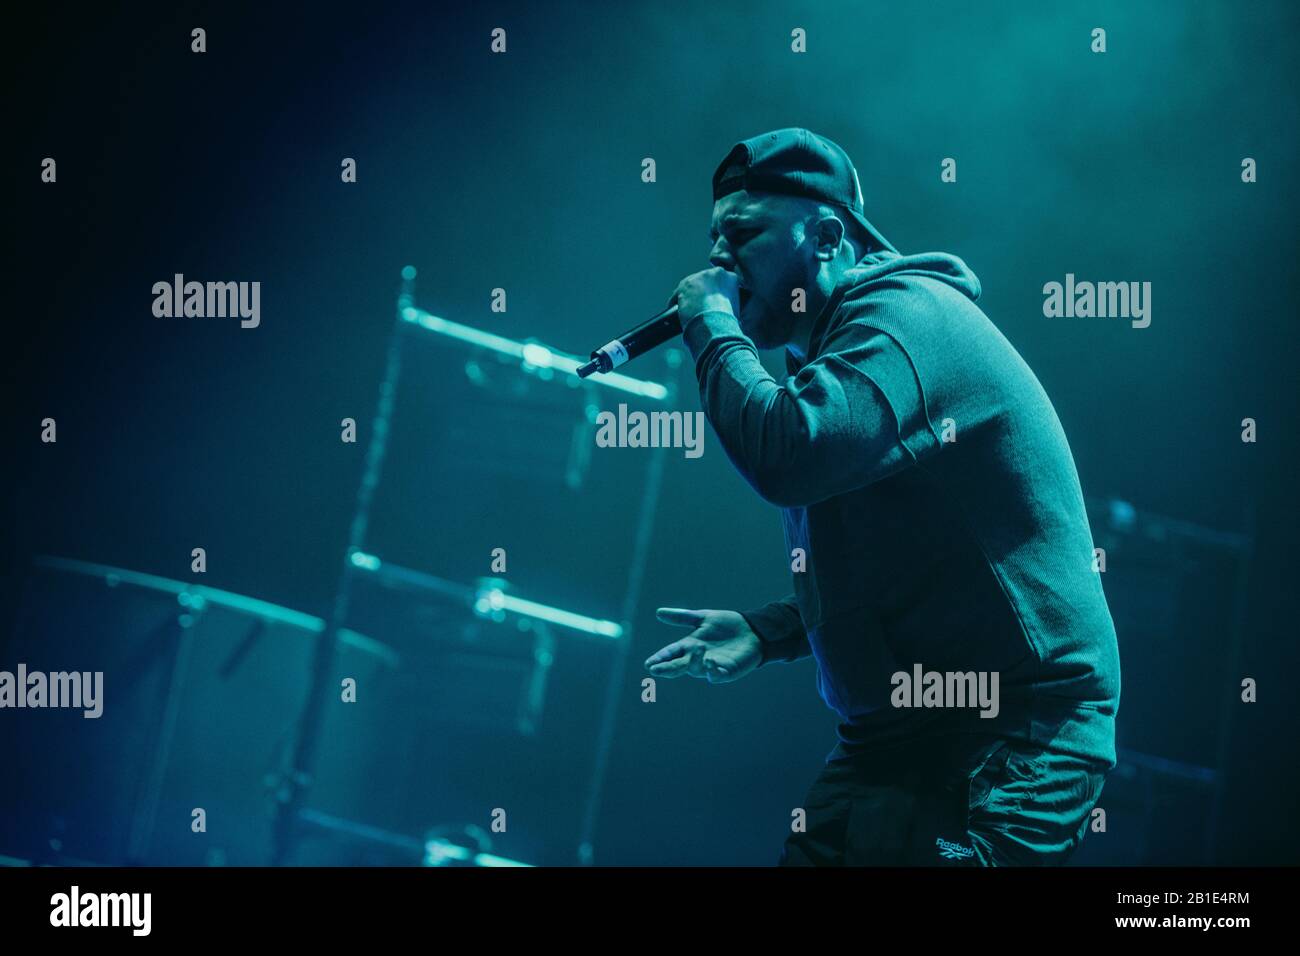 Copenhagen, Denmark. 21st, February 2020. The English rapper Jaykae performs a live concert at Royal Arena in Copenhagen. (Photo credit: Gonzales Photo - Nikolaj Bransholm). Stock Photo